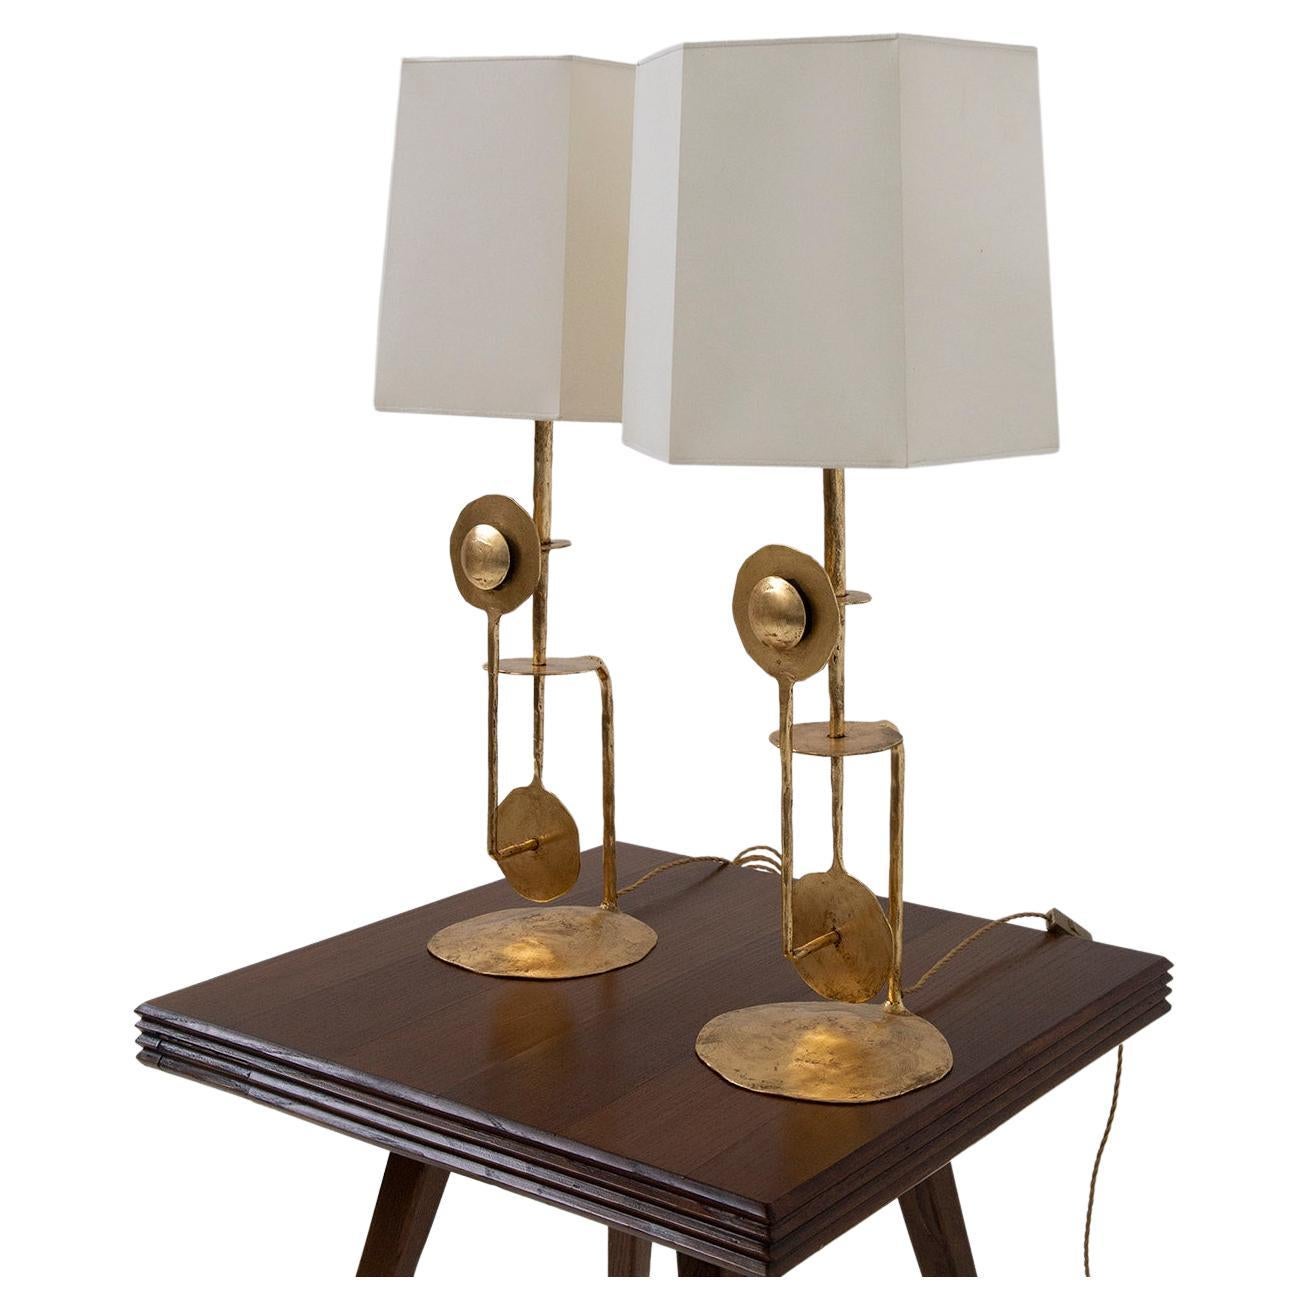 Pair of Italian Brutalist table lamps in gilded metal